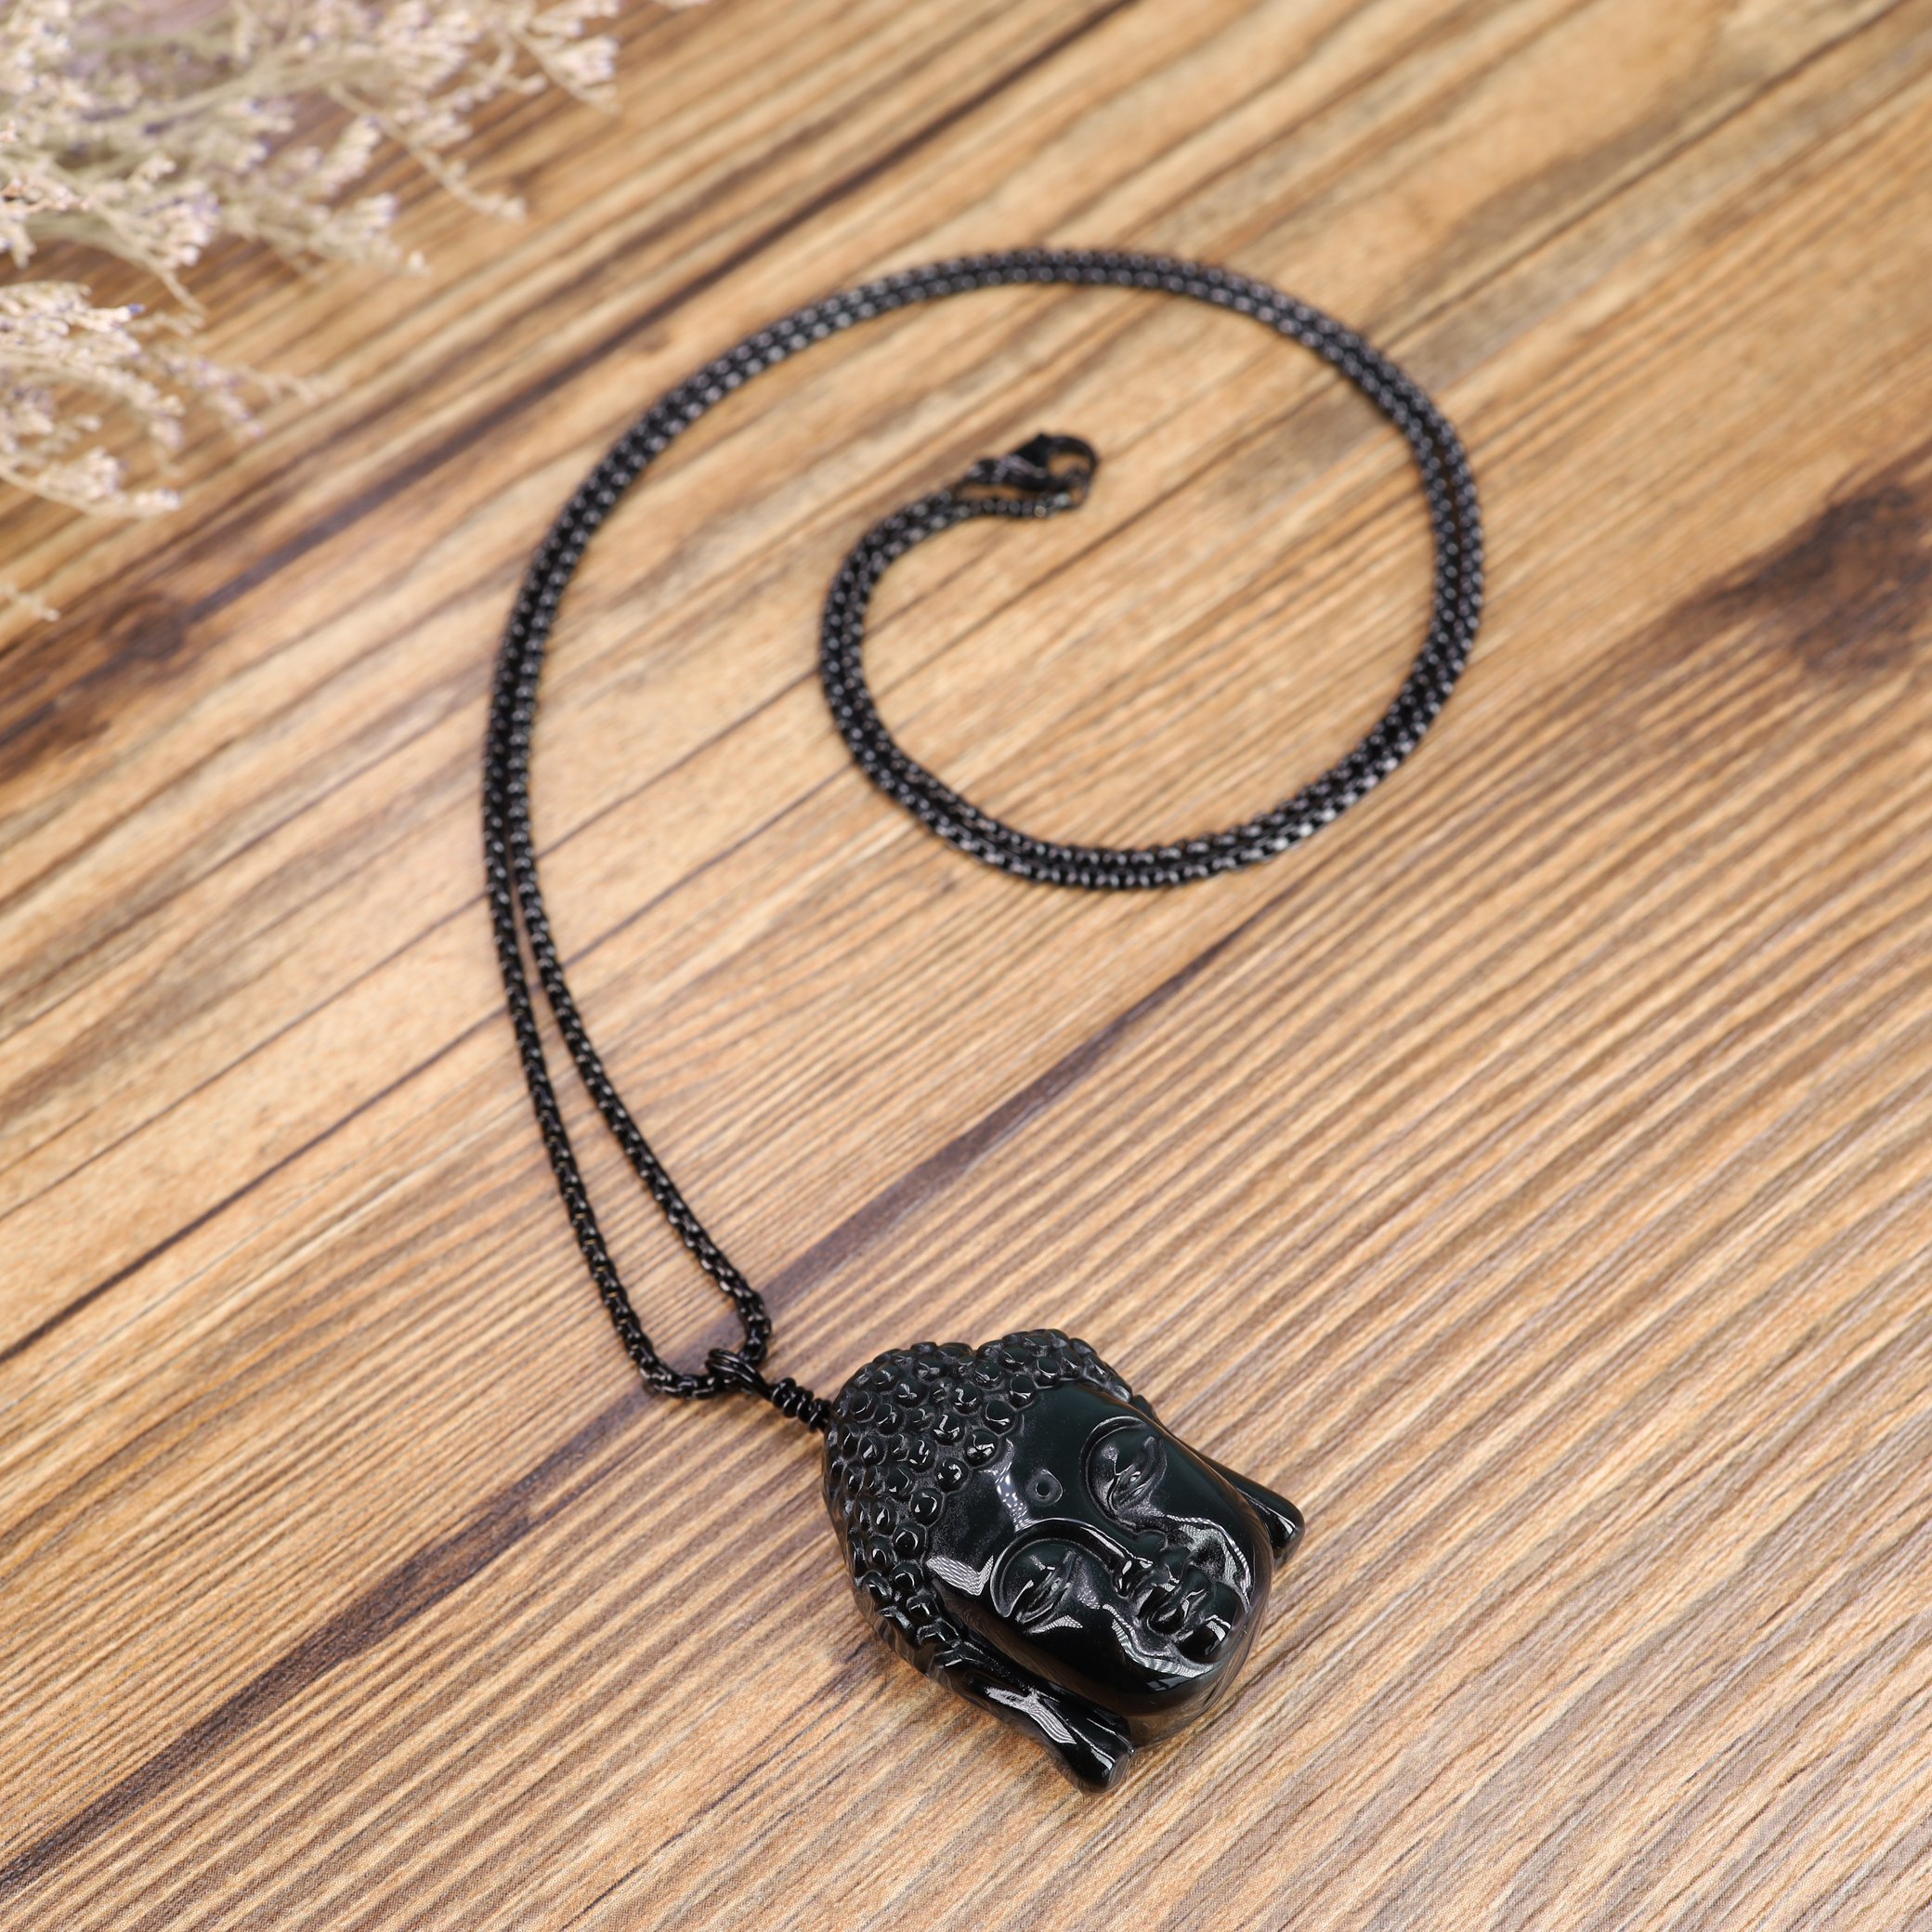 COAI OM Black Obsidian Stone Prayer Pendant Necklace 